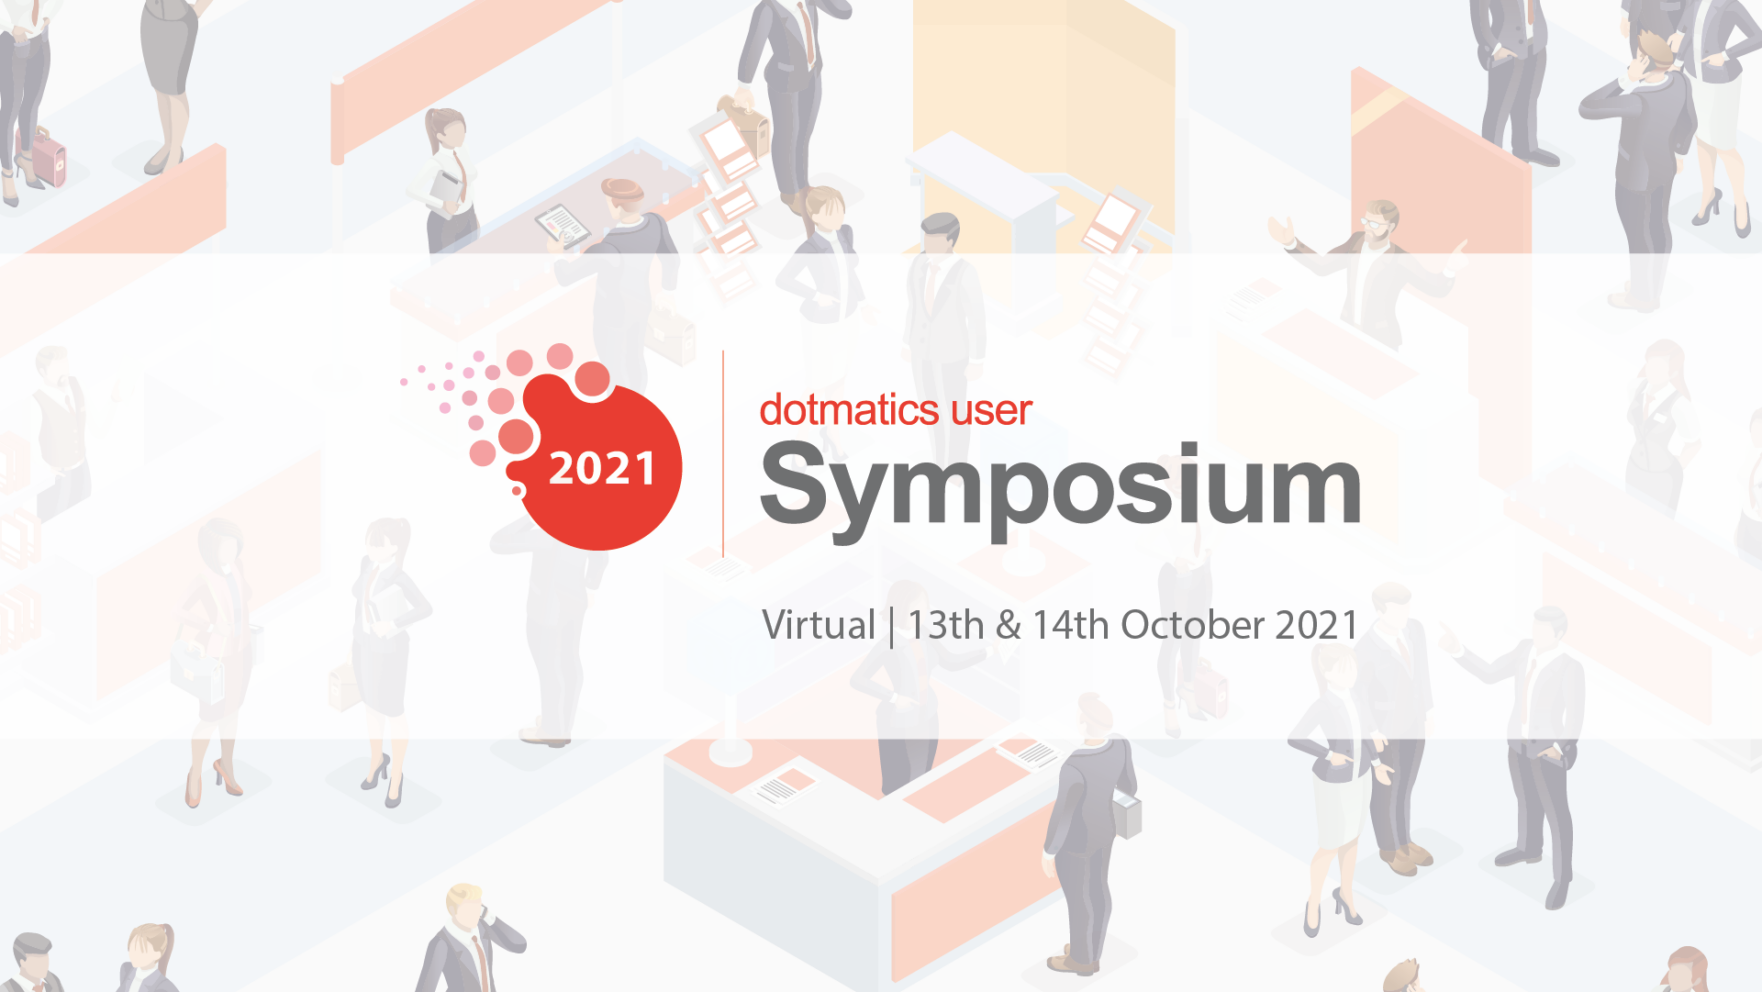 Symposium-2021-1920x1080-bg-image-1762x992